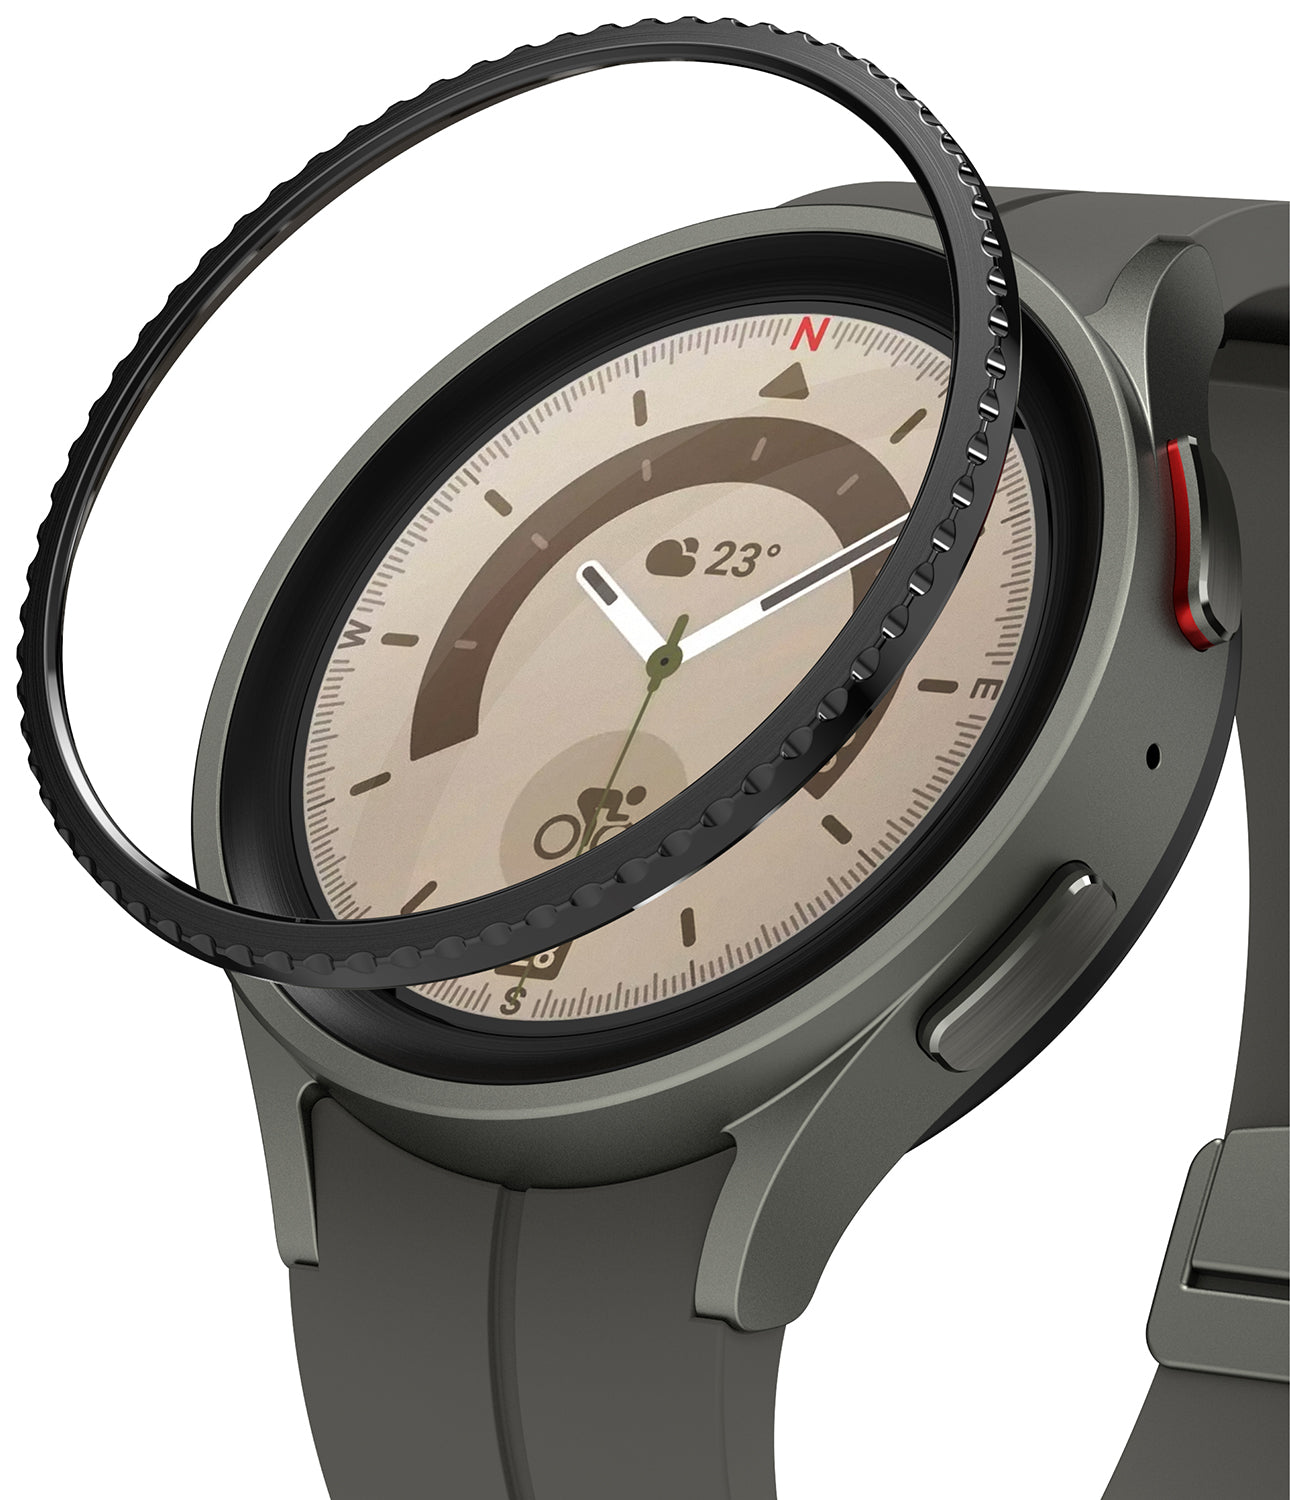 Galaxy Watch 5 Pro 45mm | Bezel Styling 45-31